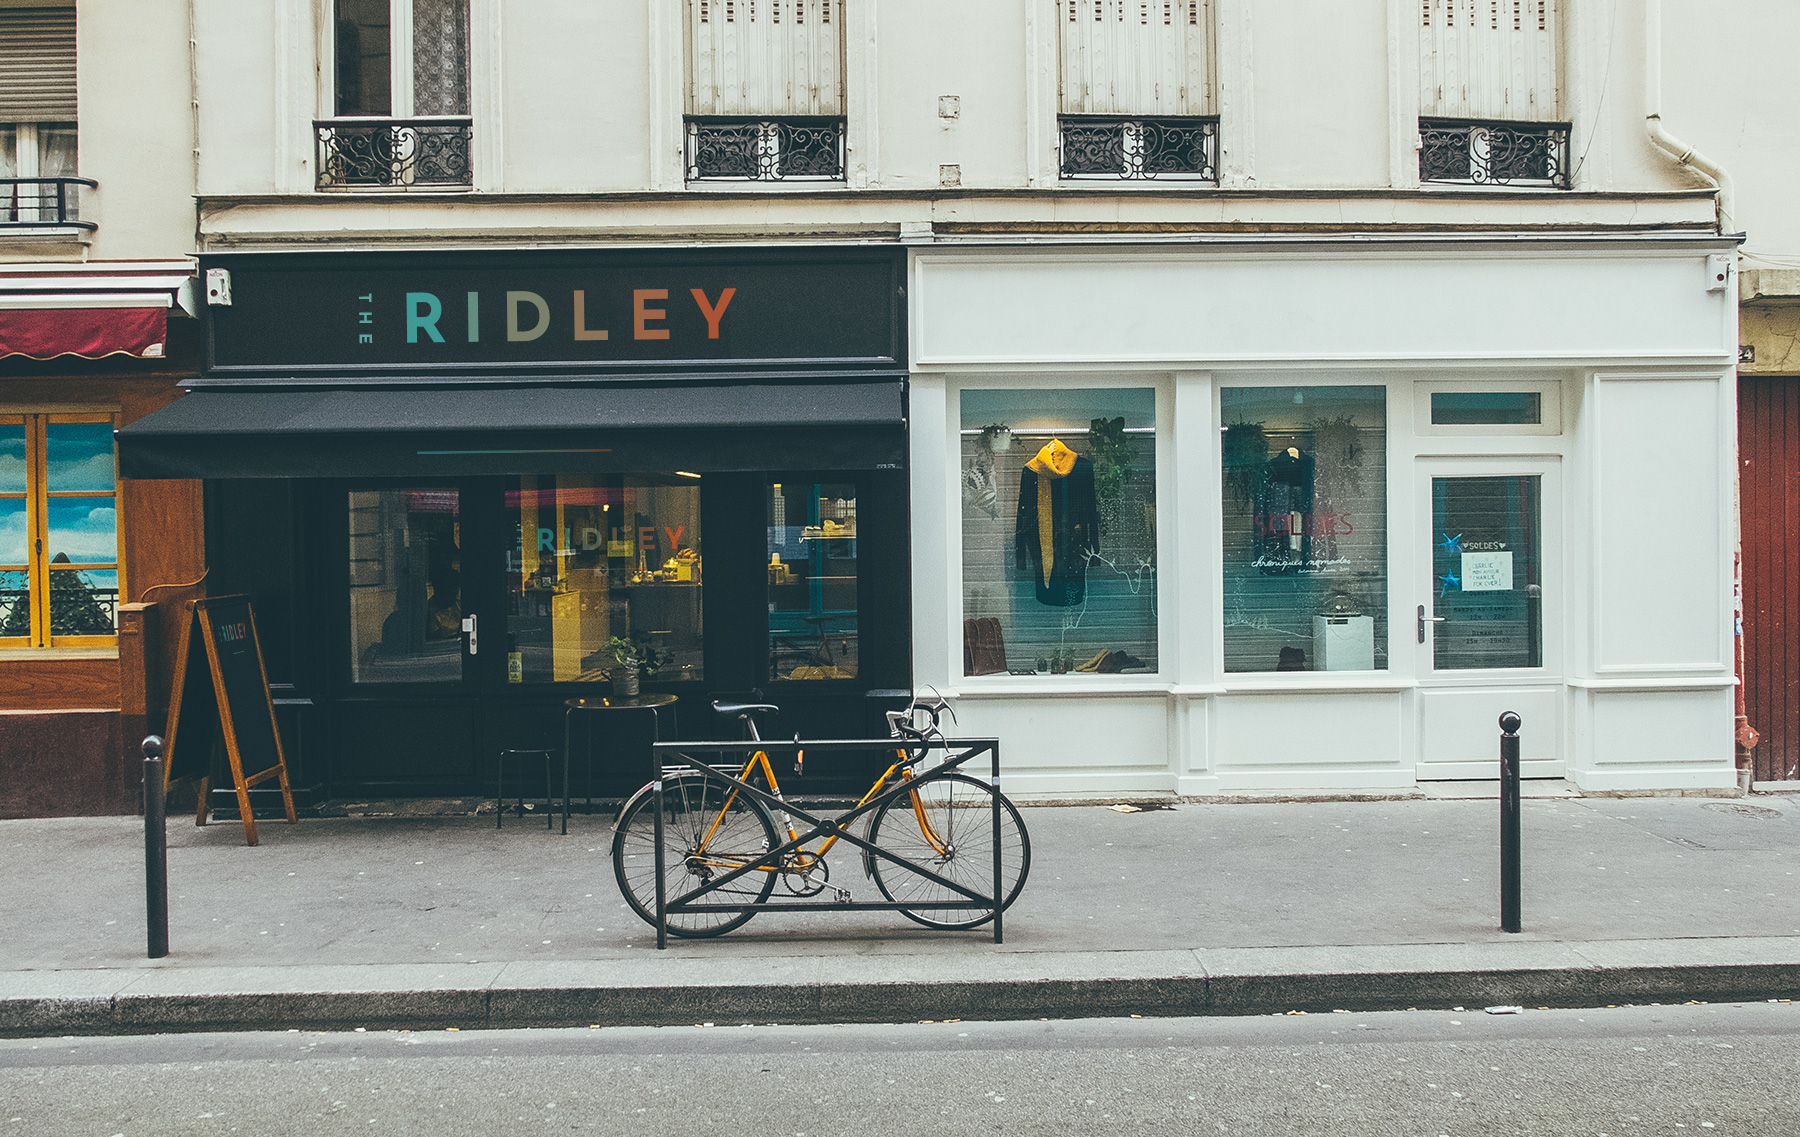 Skiltning og facade til bar / restaurant Ridley i London